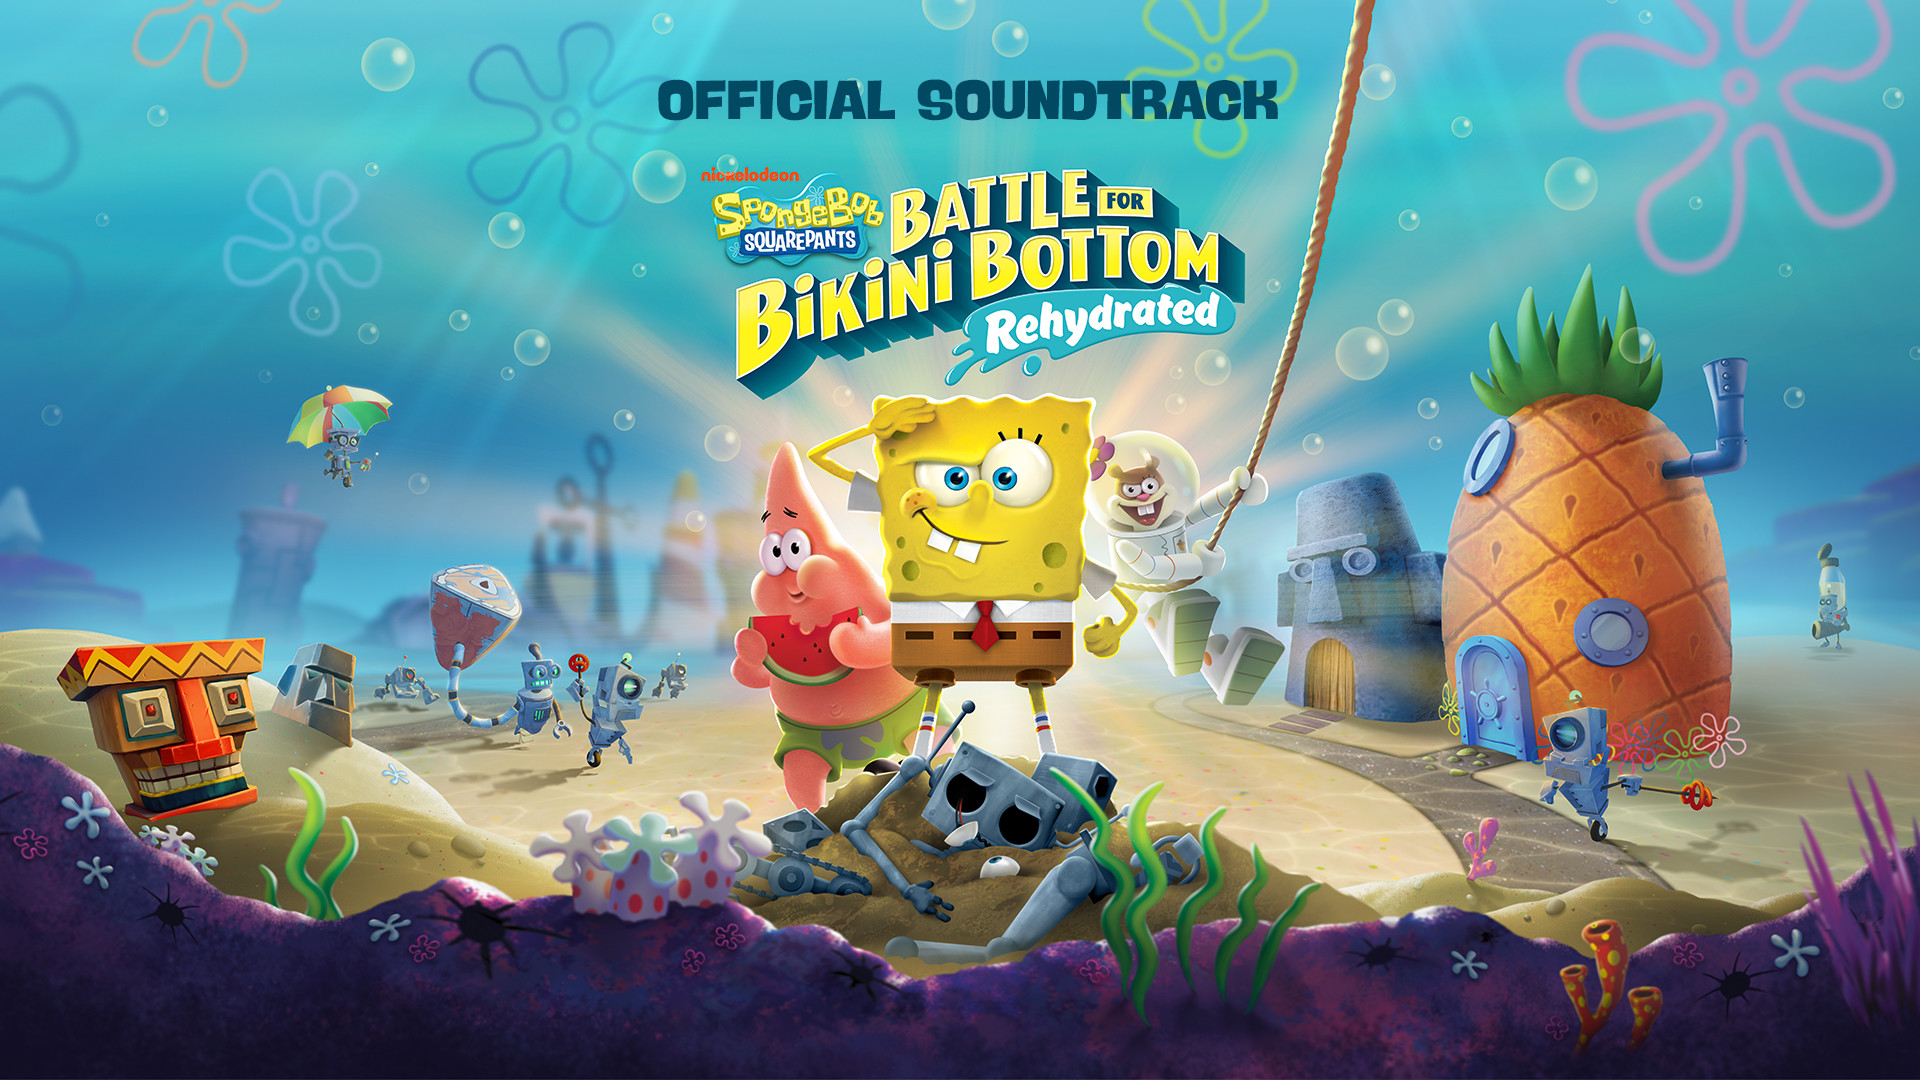 SpongeBob SquarePants: Battle for Bikini Bottom - Rehydrated Soundtrack Steam CD Key 4.43 $